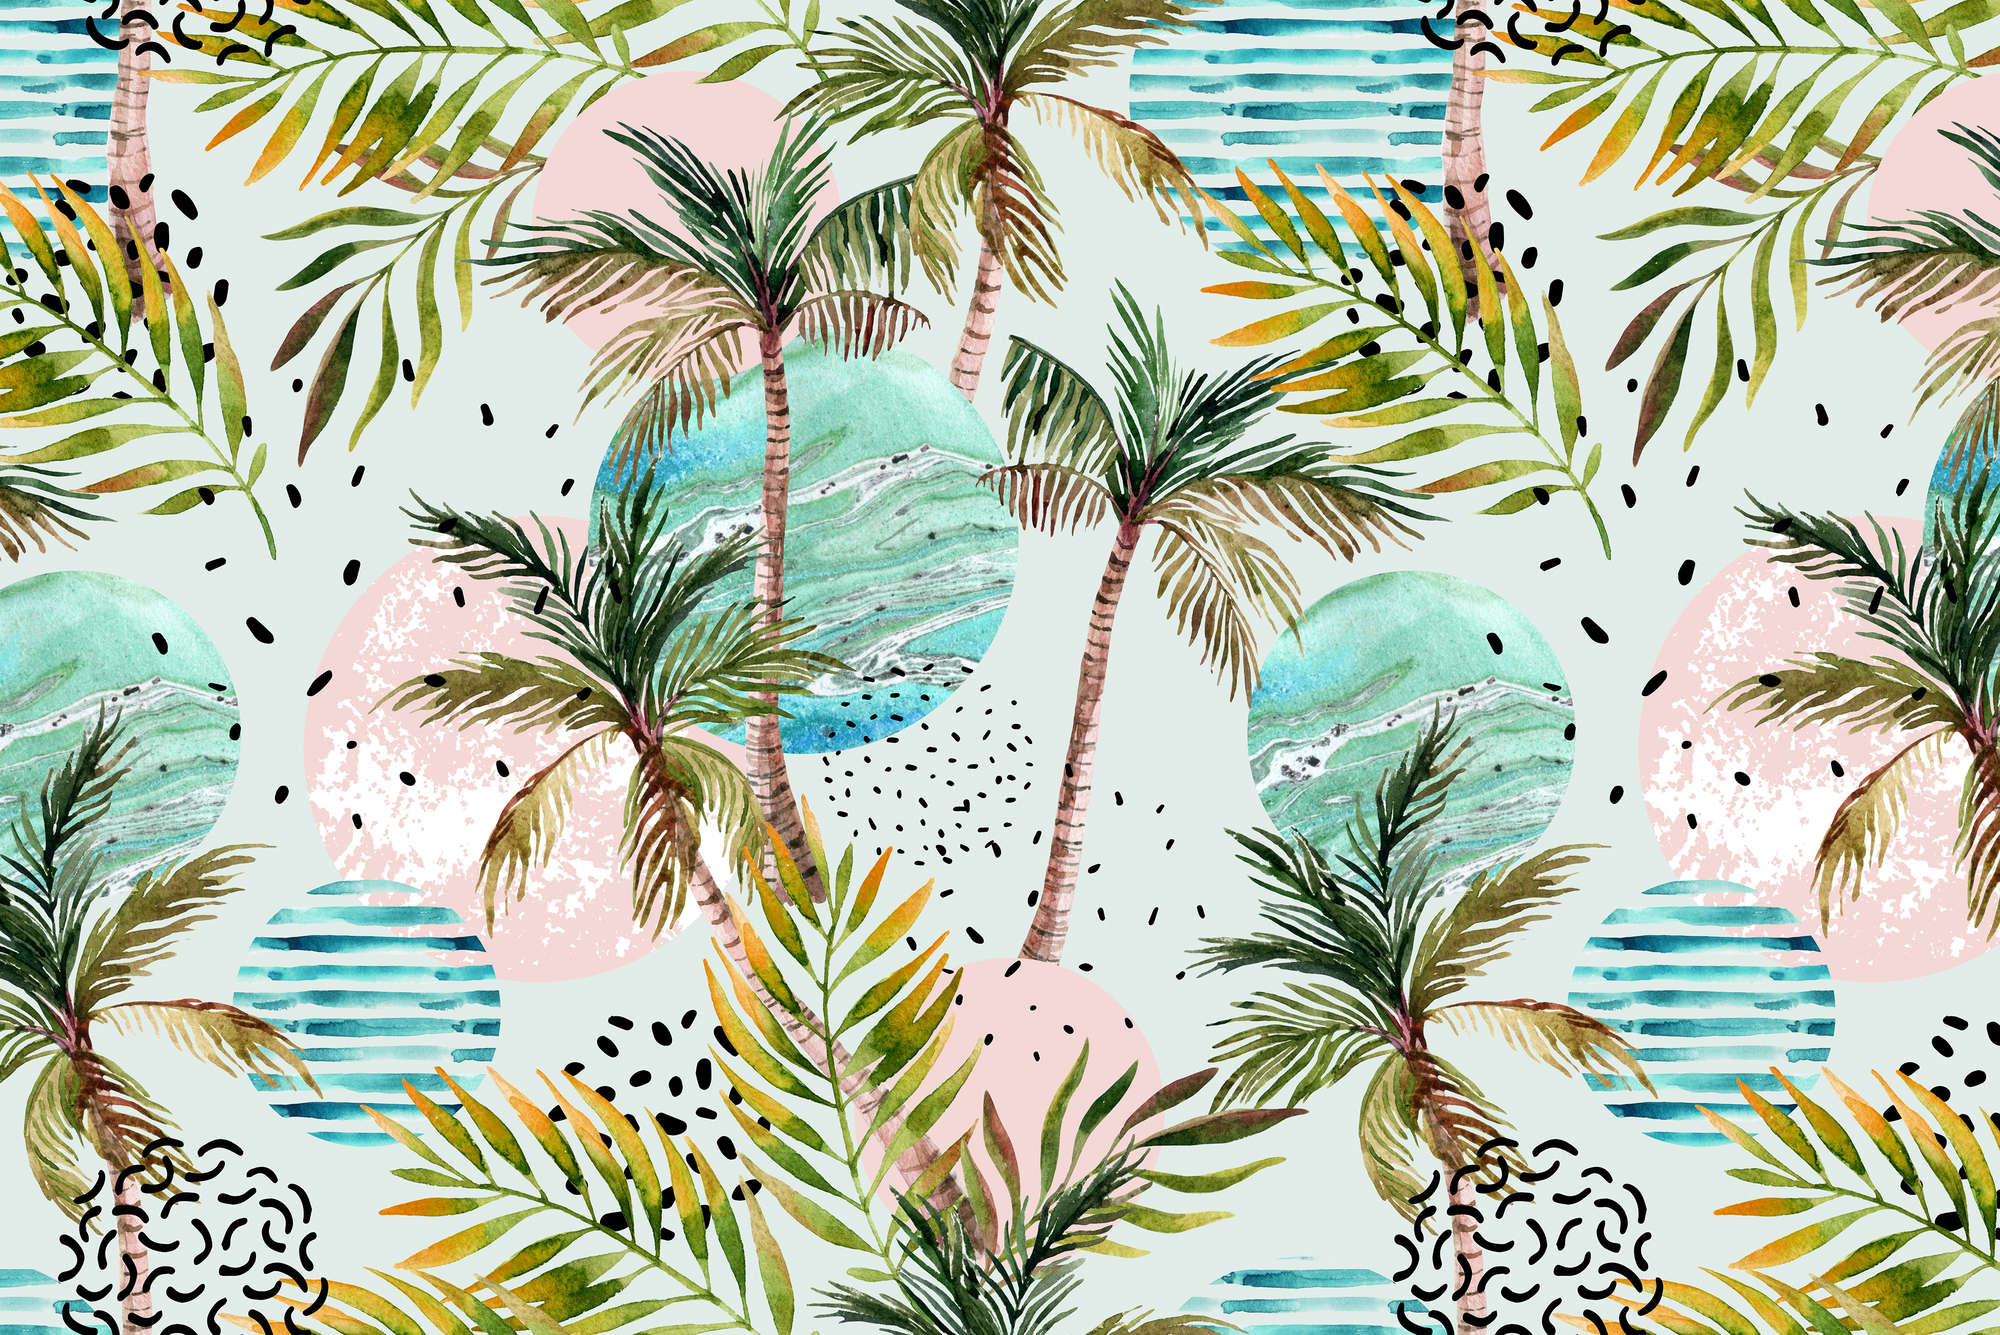             Grafik Fototapete Palmen mit Wellensymbolen auf Premium Glattvlies
        